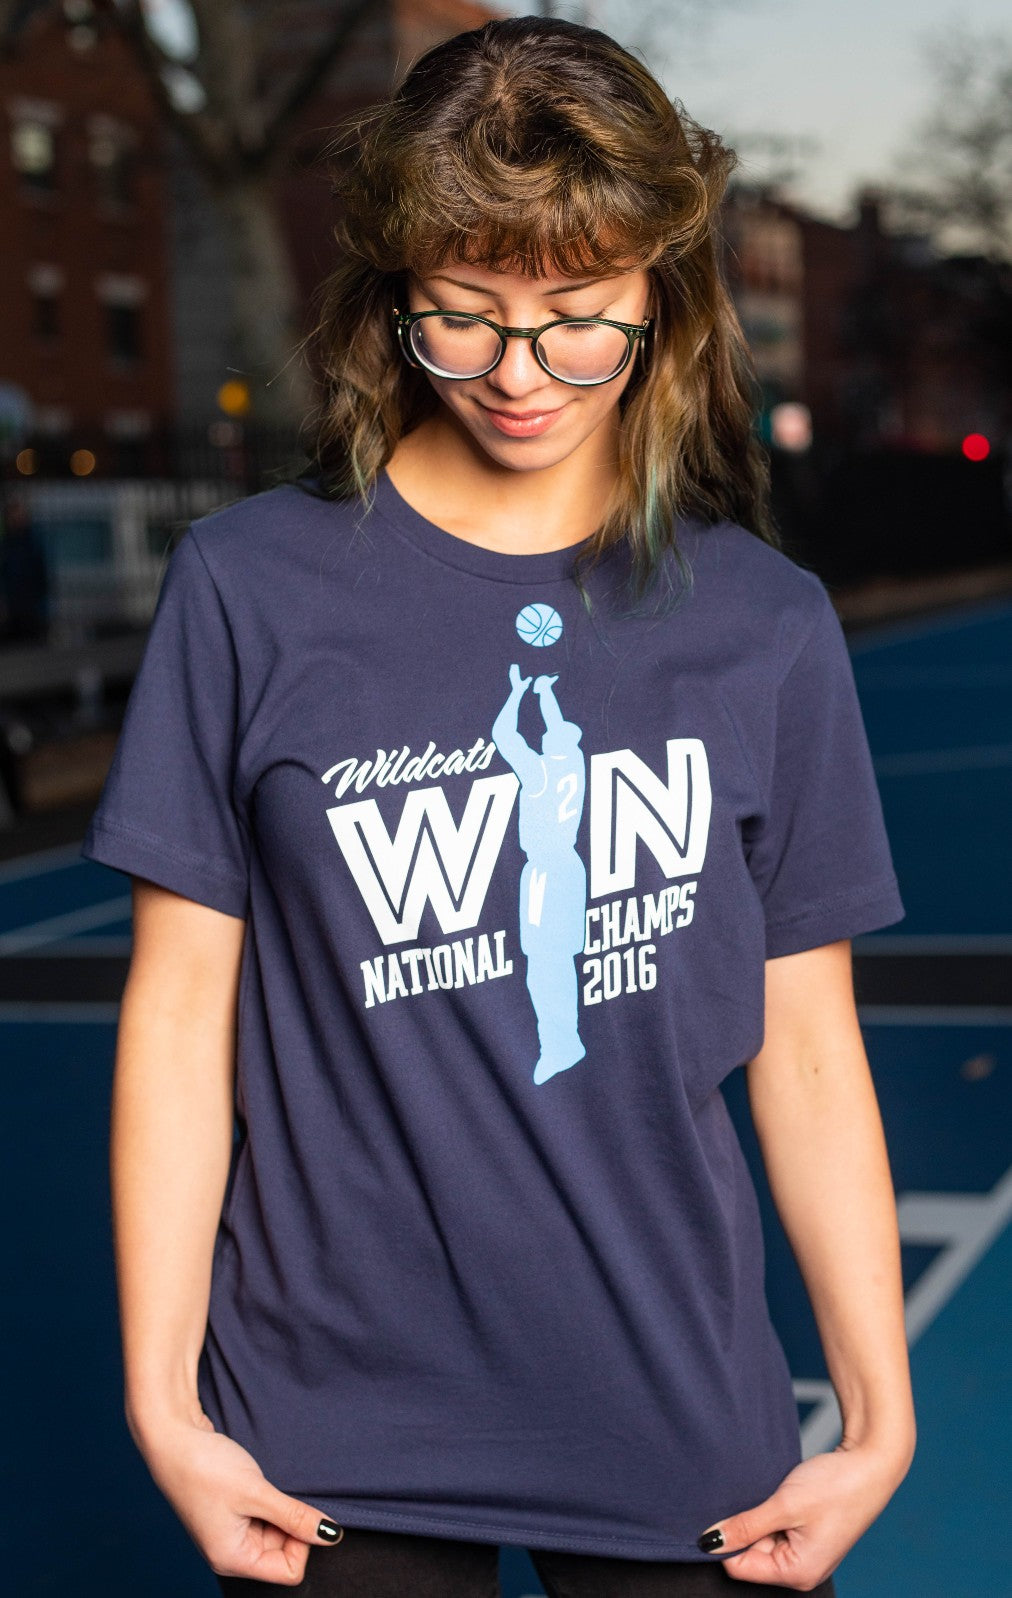 Wildcats WIN - 2016 National Champions T-shirt